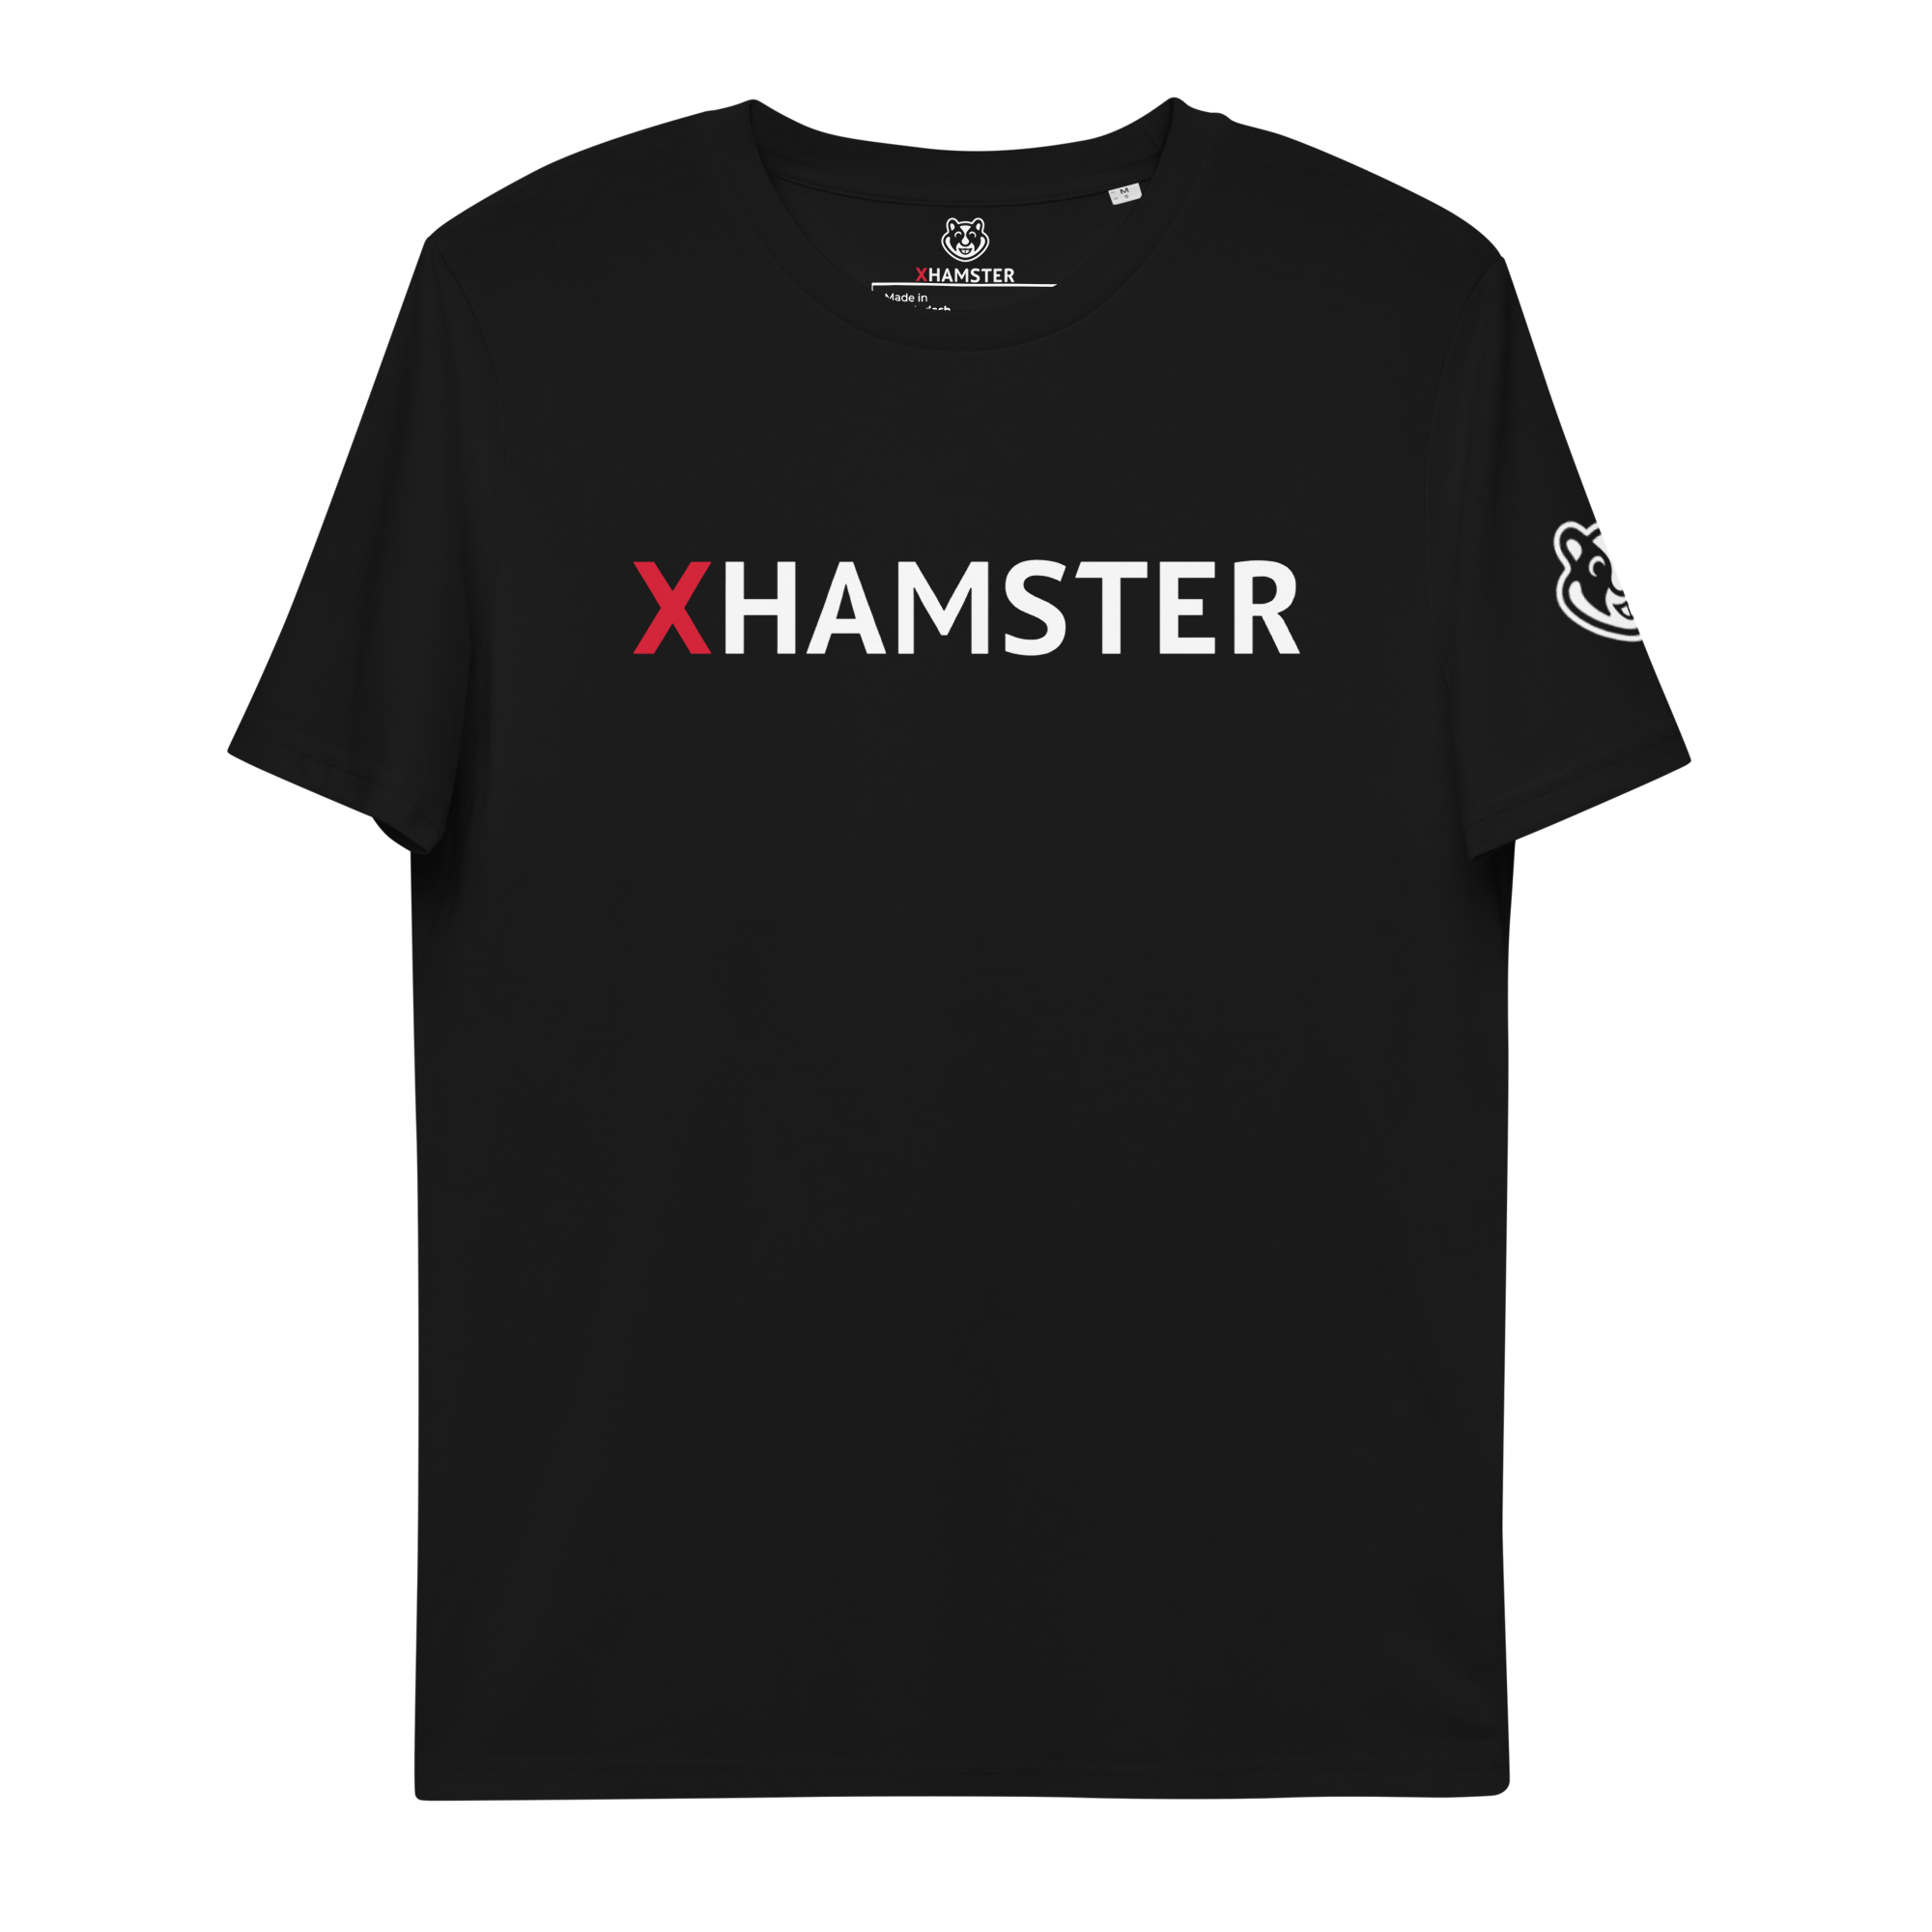 xHamster Unisex Cotton T-shirt (Black)